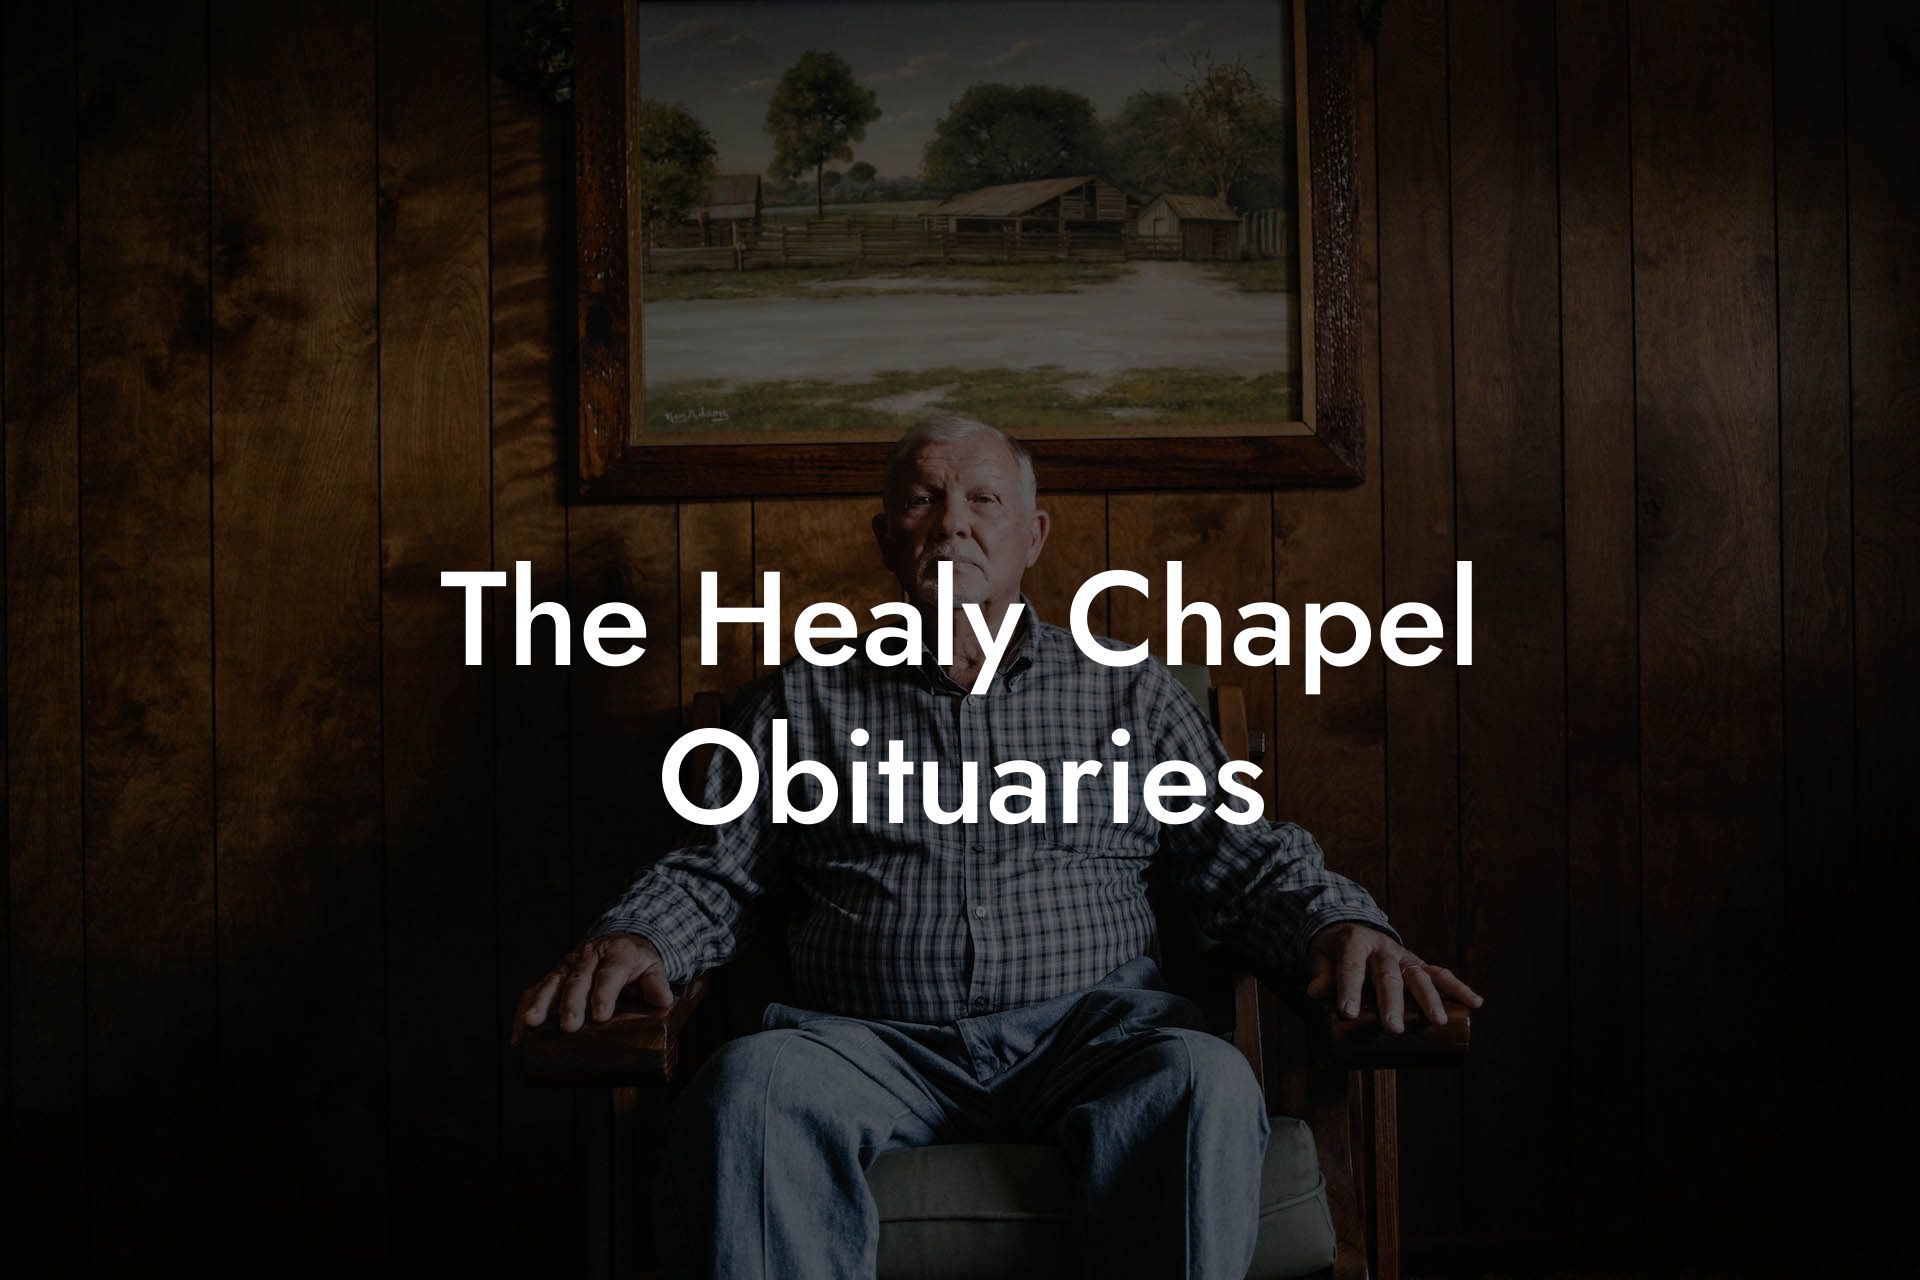 The Healy Chapel Obituaries